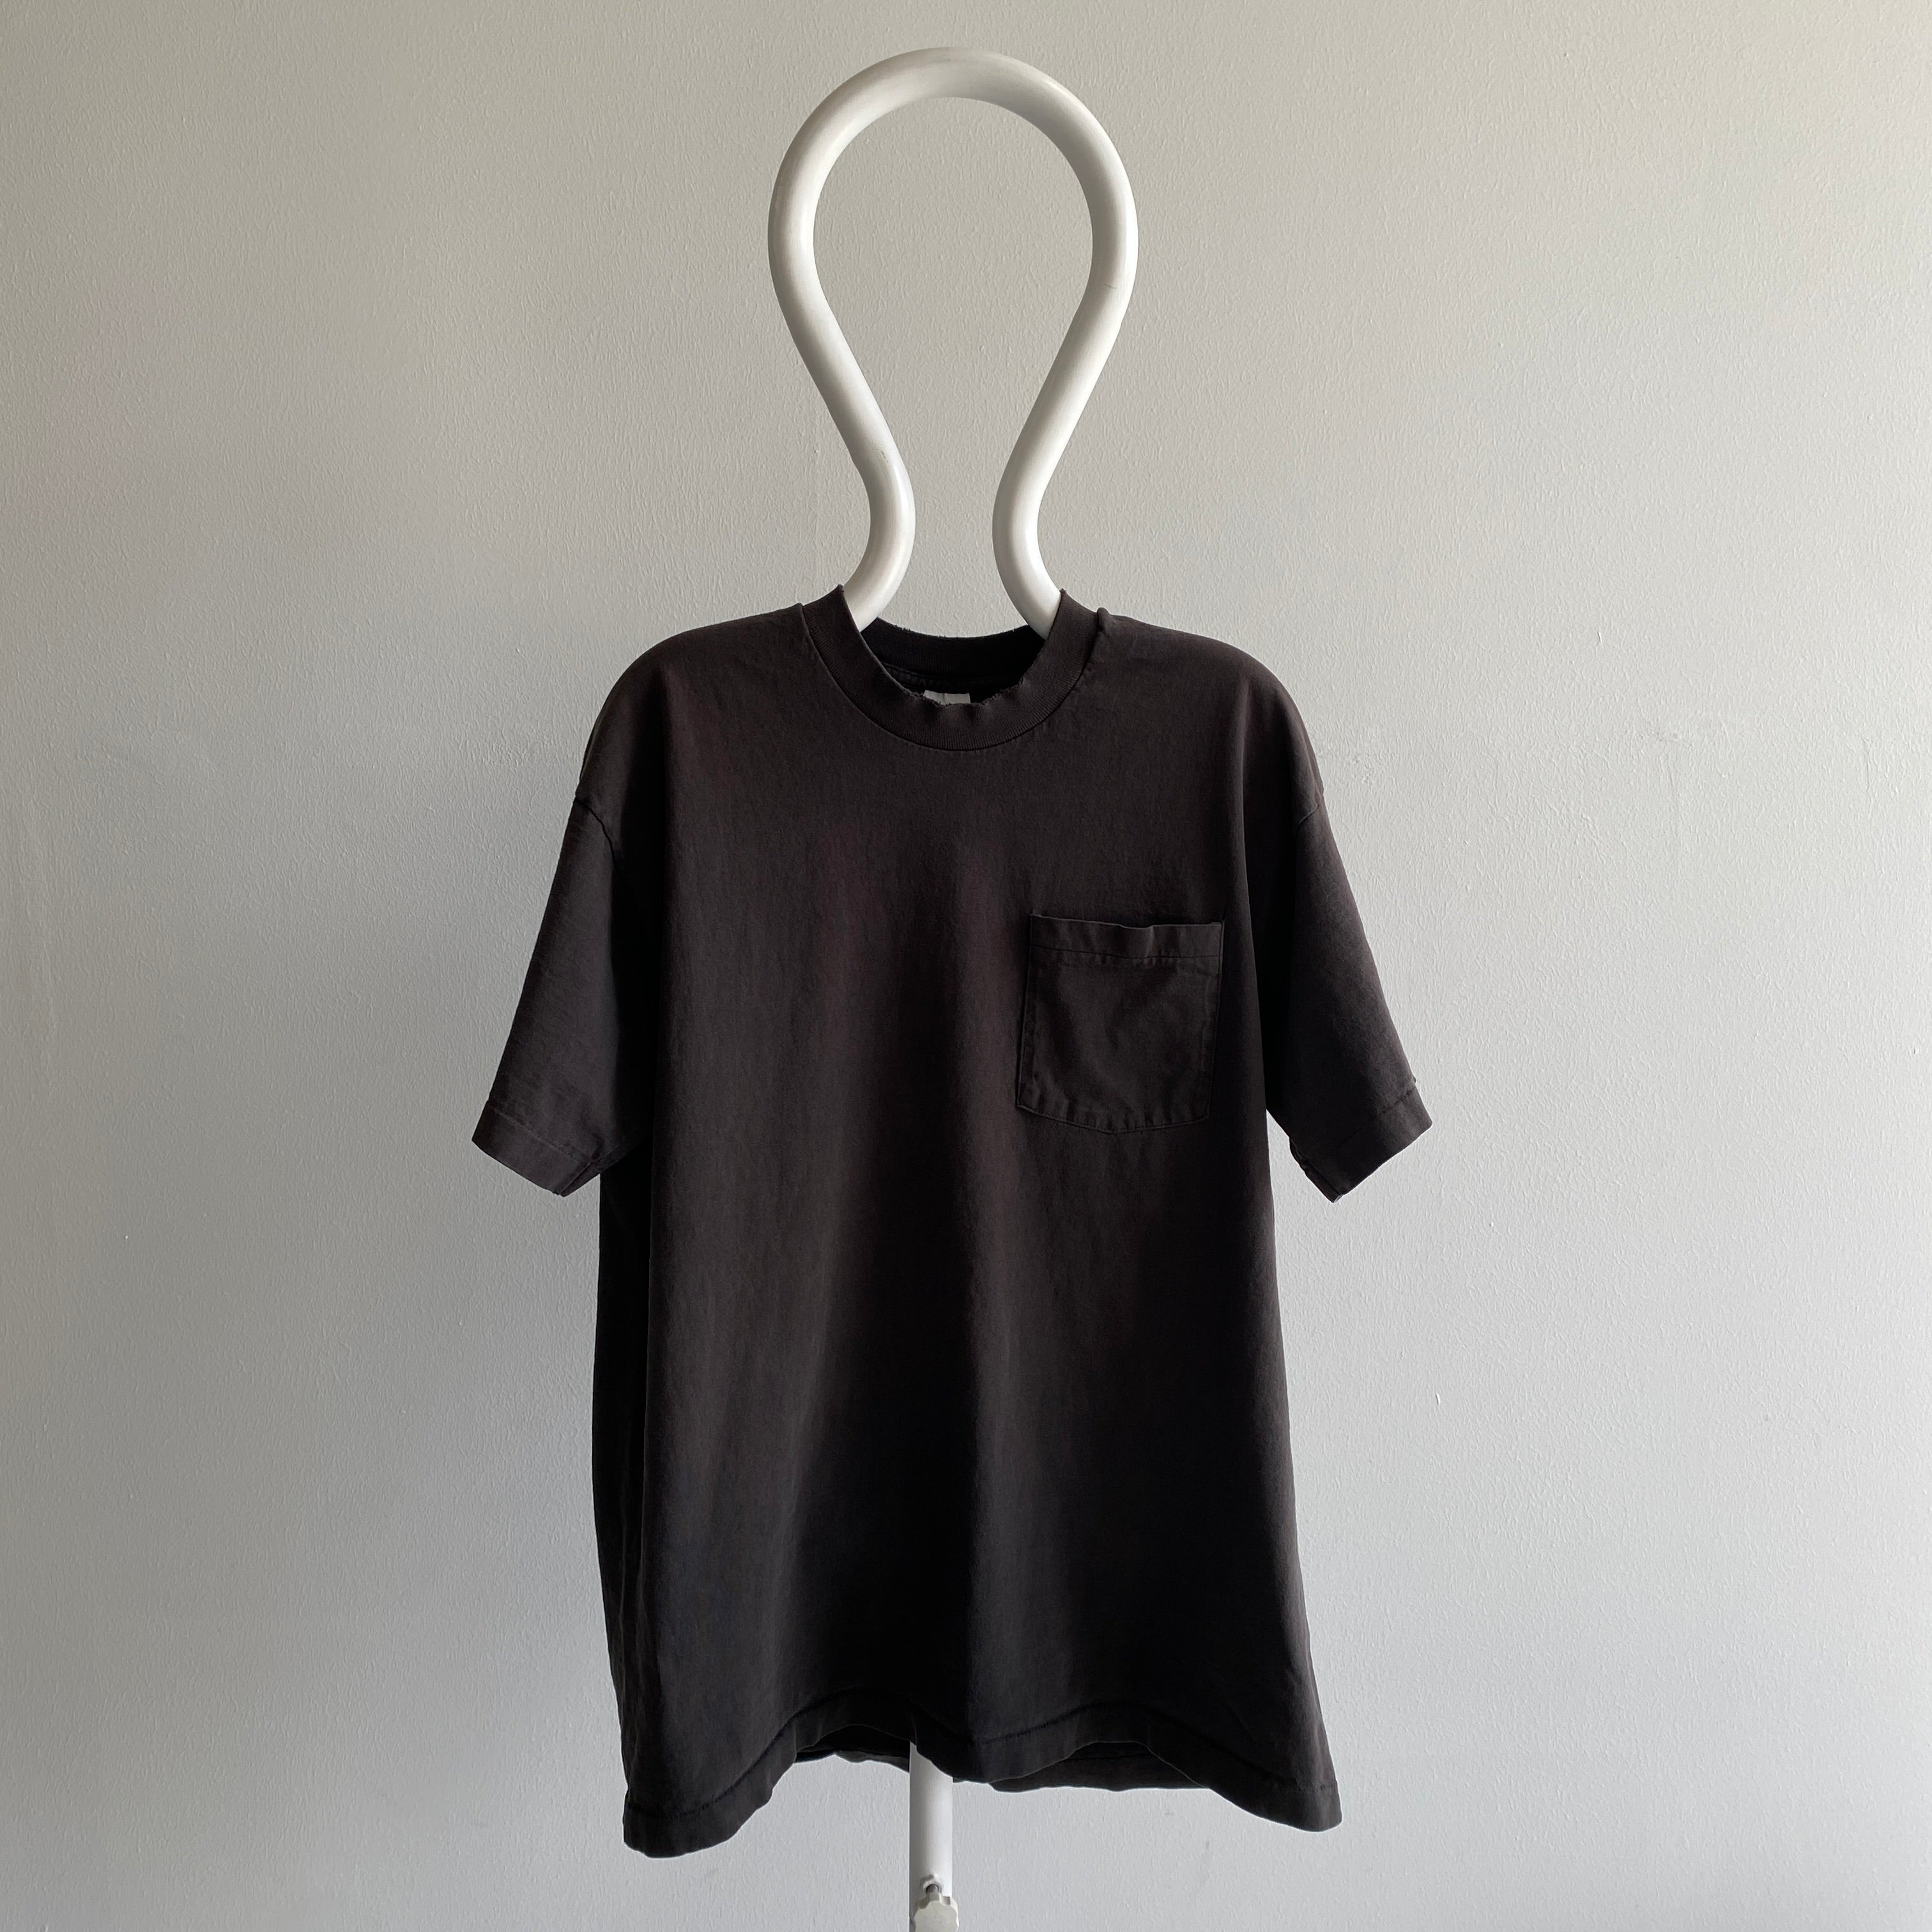 1980s Springfoot Cotton Blank Black Pocket T-Shirt - CLASSIC